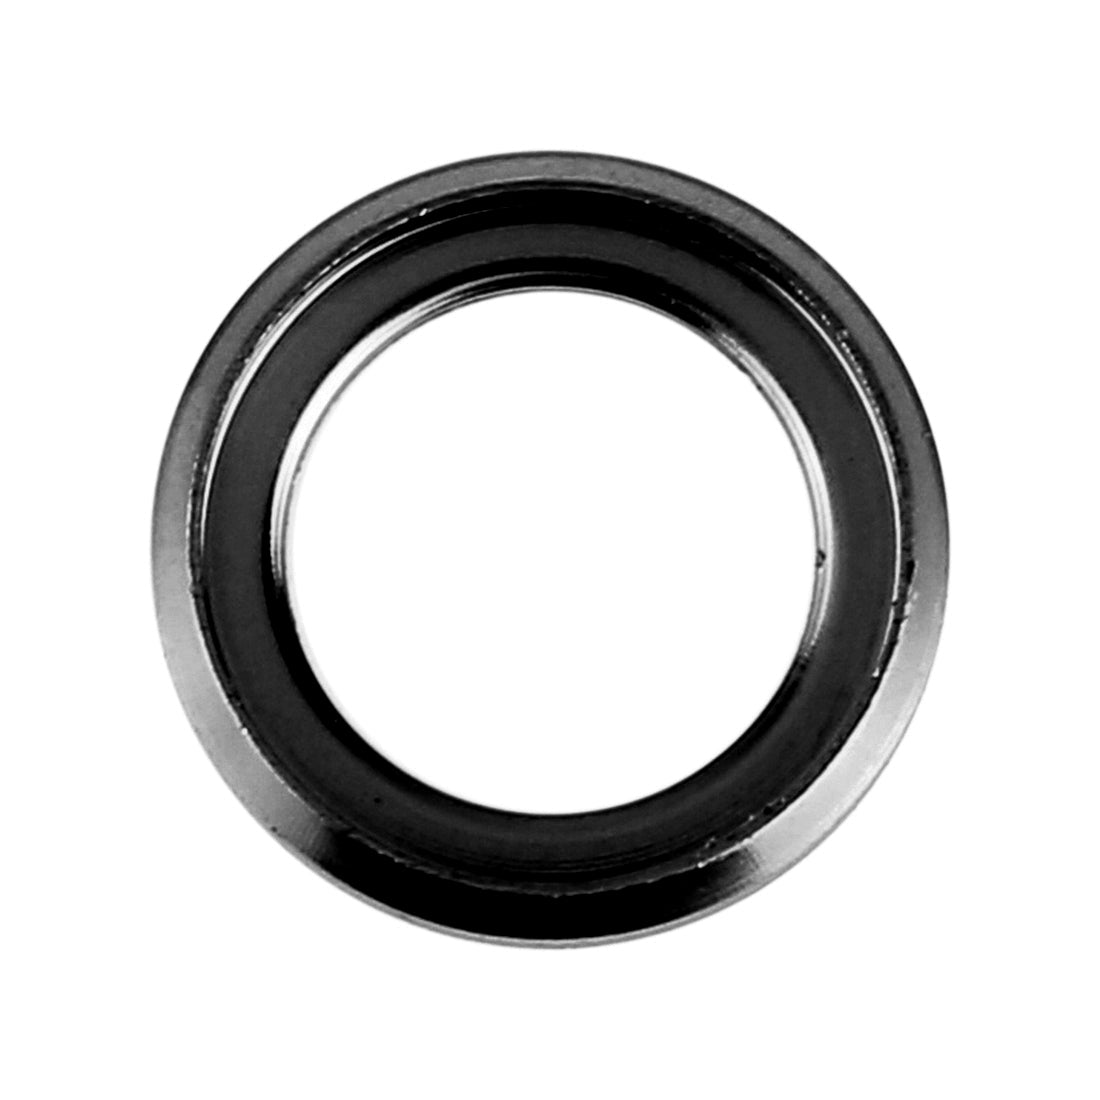 Rear Camera Lens Cover Vivo X9 Black